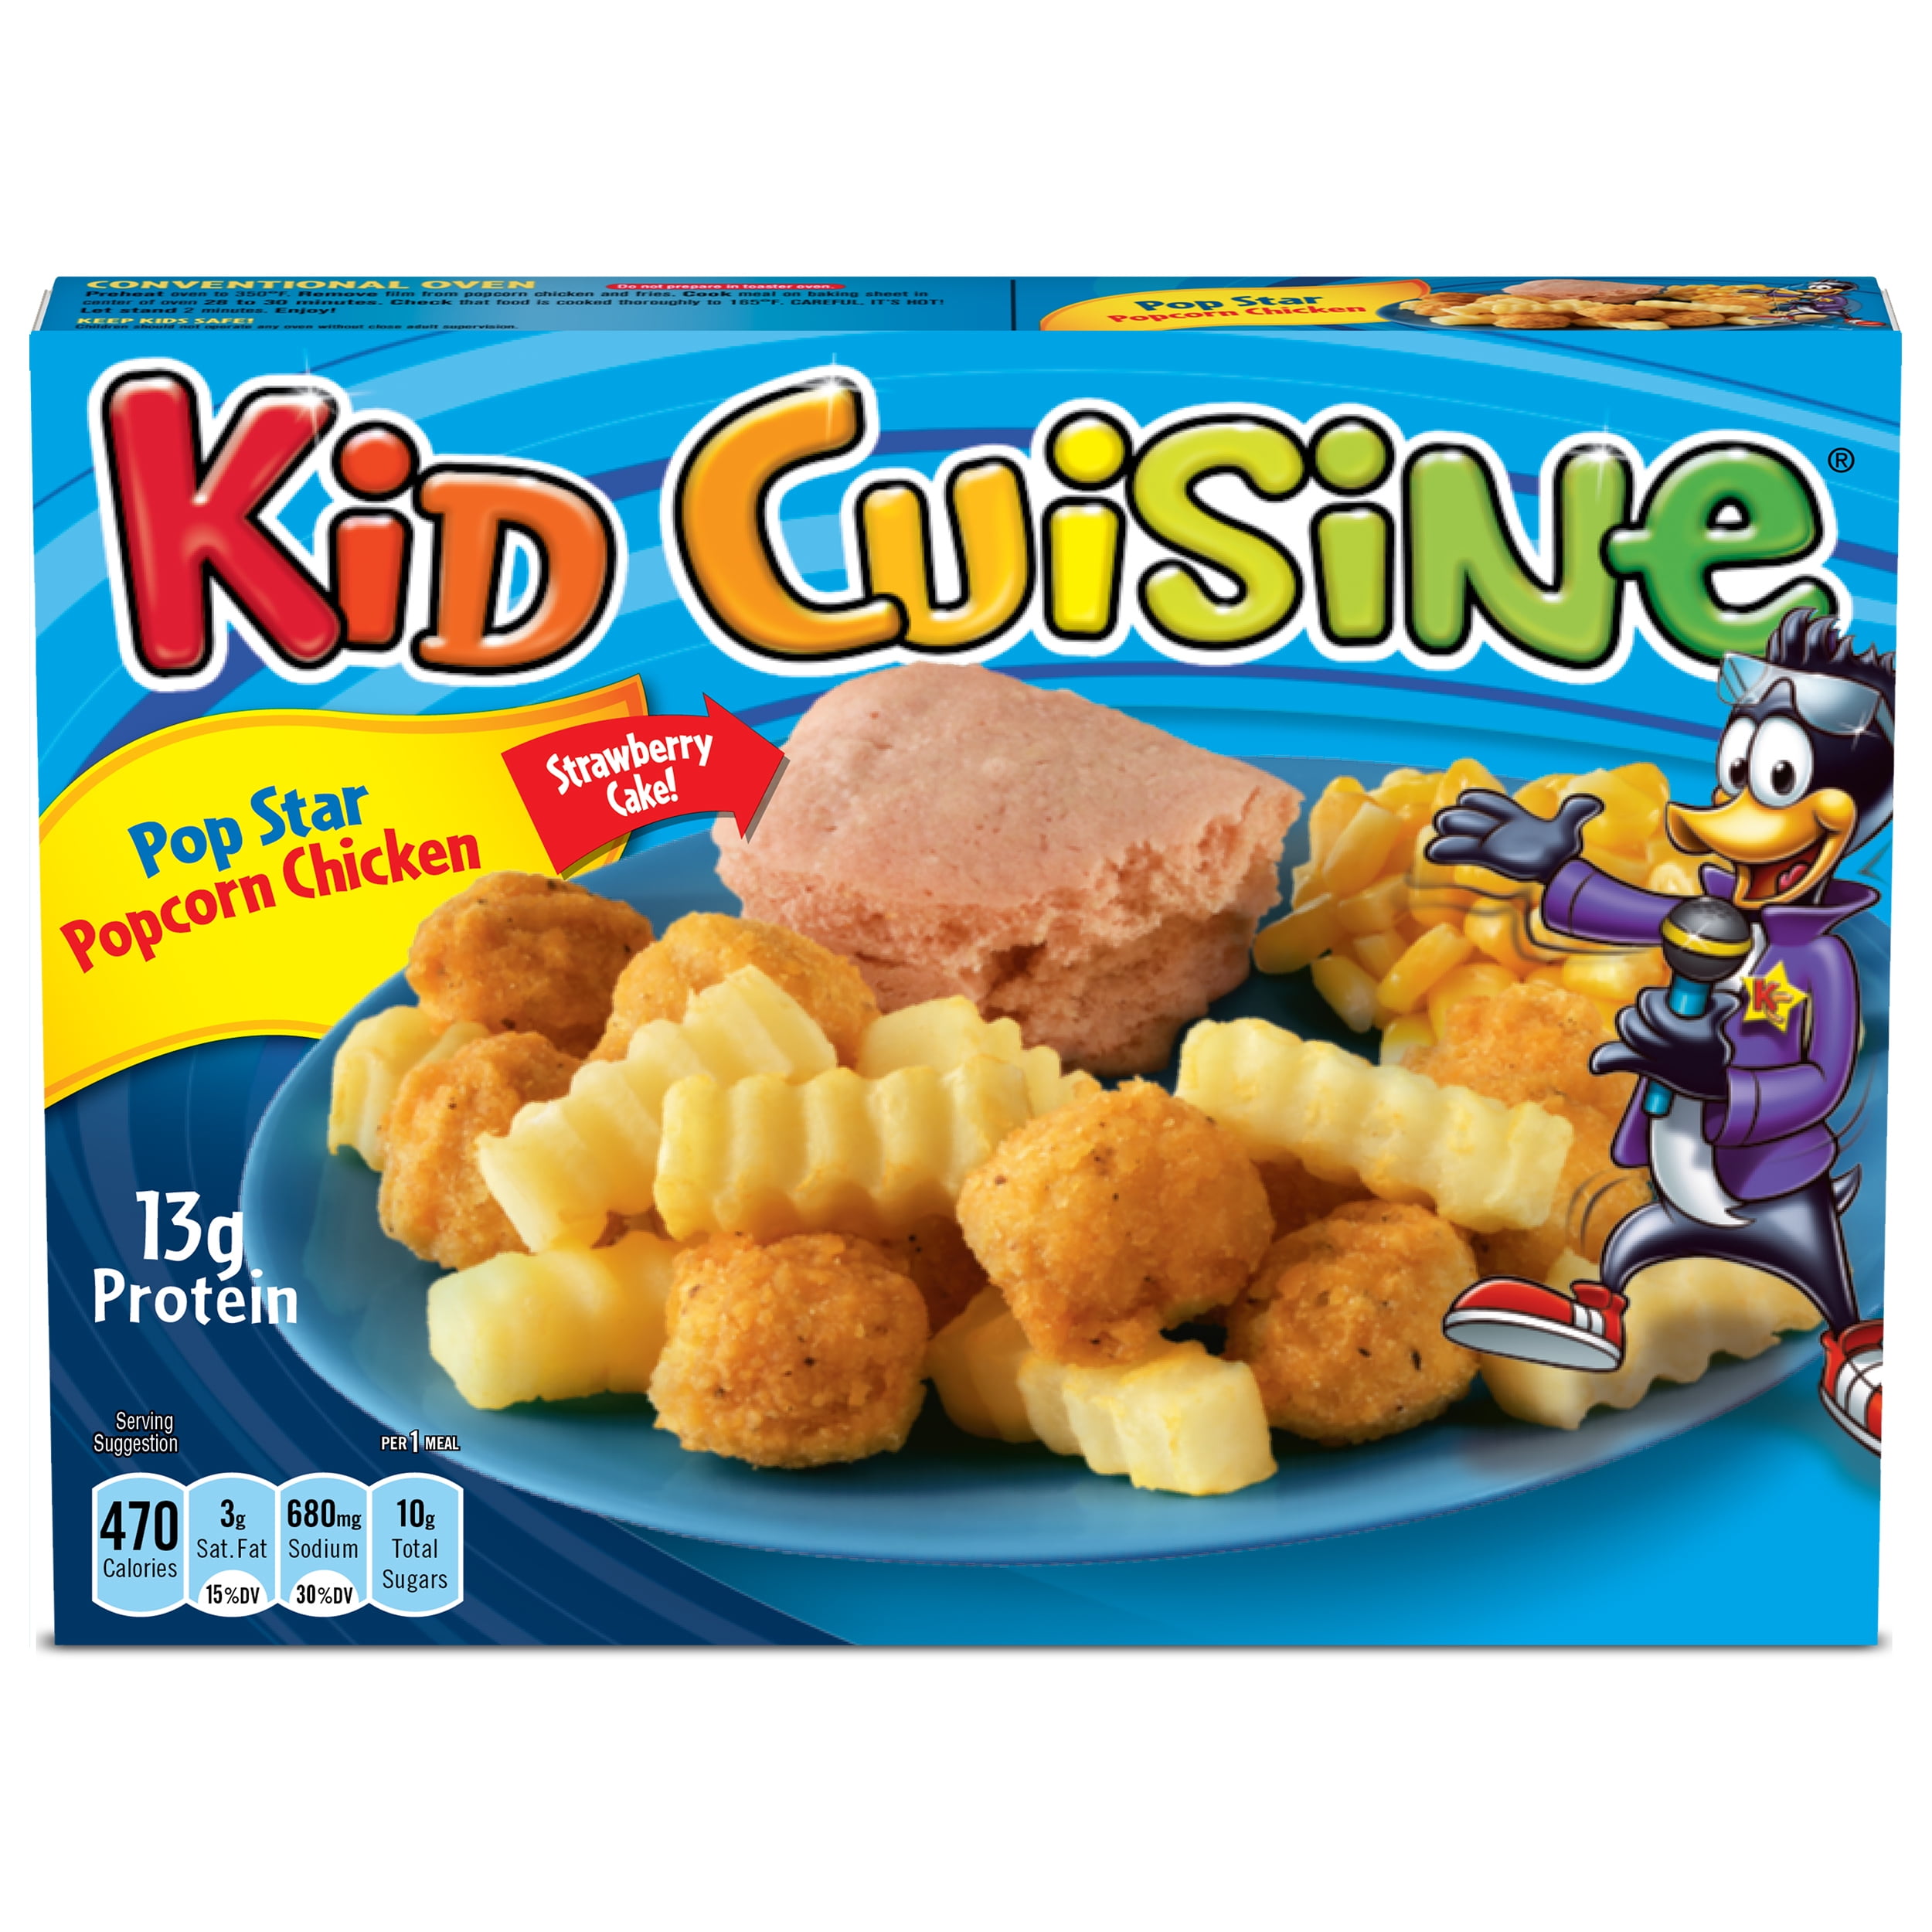 Kid Cuisine Pop Star Popcorn Chicken Frozen Meal With Corn French Fries Strawberry Cake 8 65 Oz Walmart Com Walmart Com